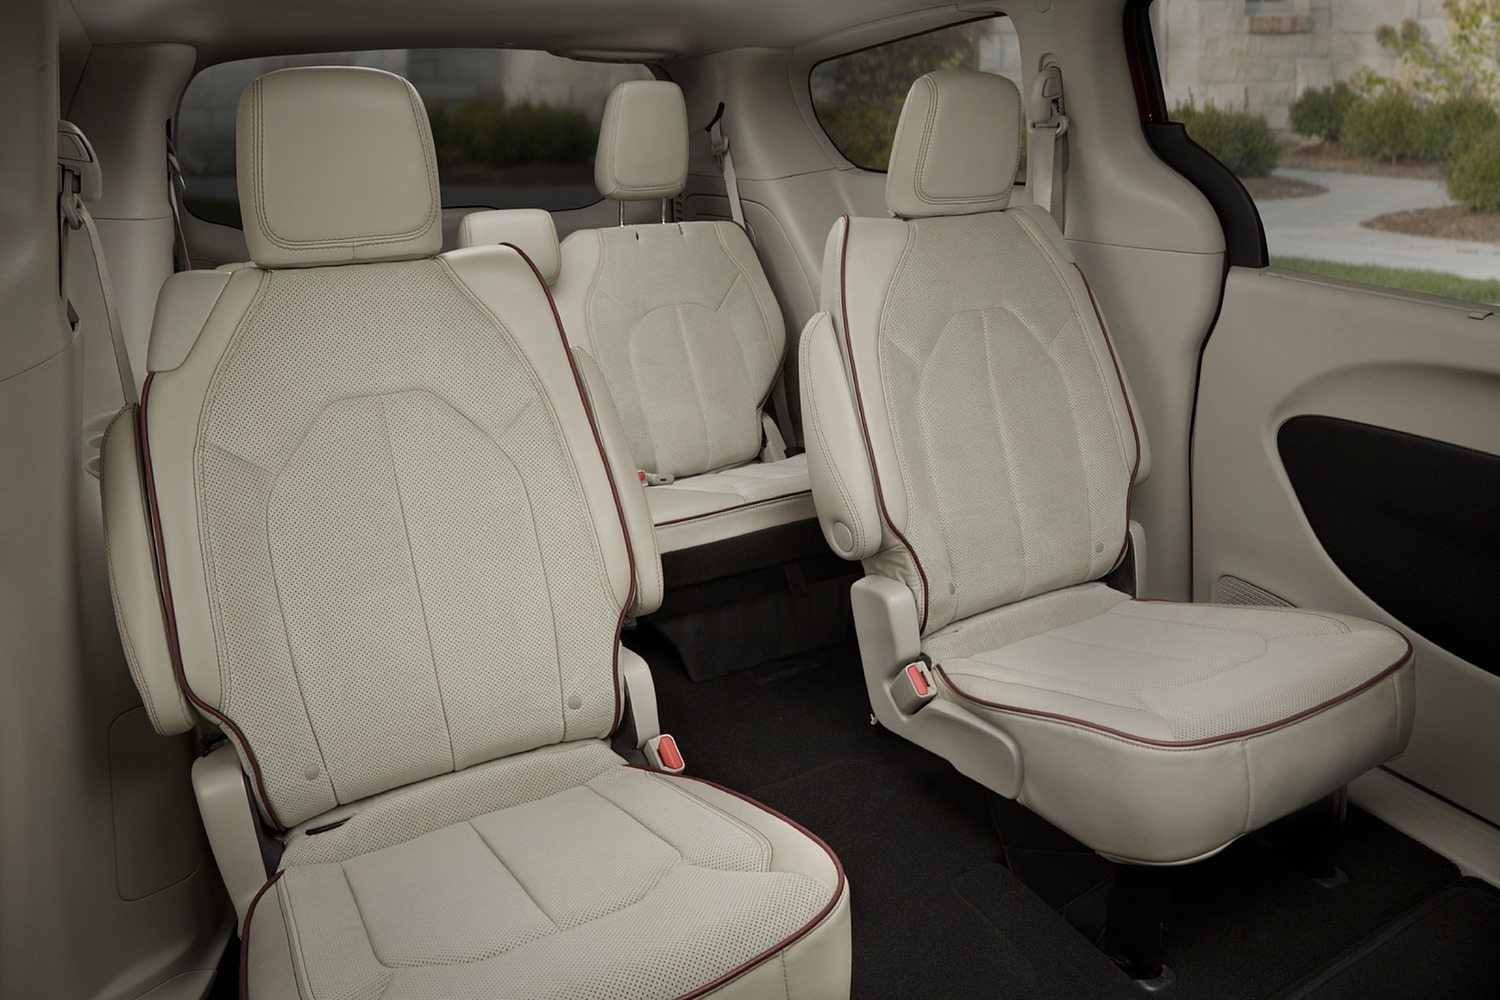 Chrysler Pacifica Limited Passenger Minivan Rear Interior Shown (2017 model year shown)